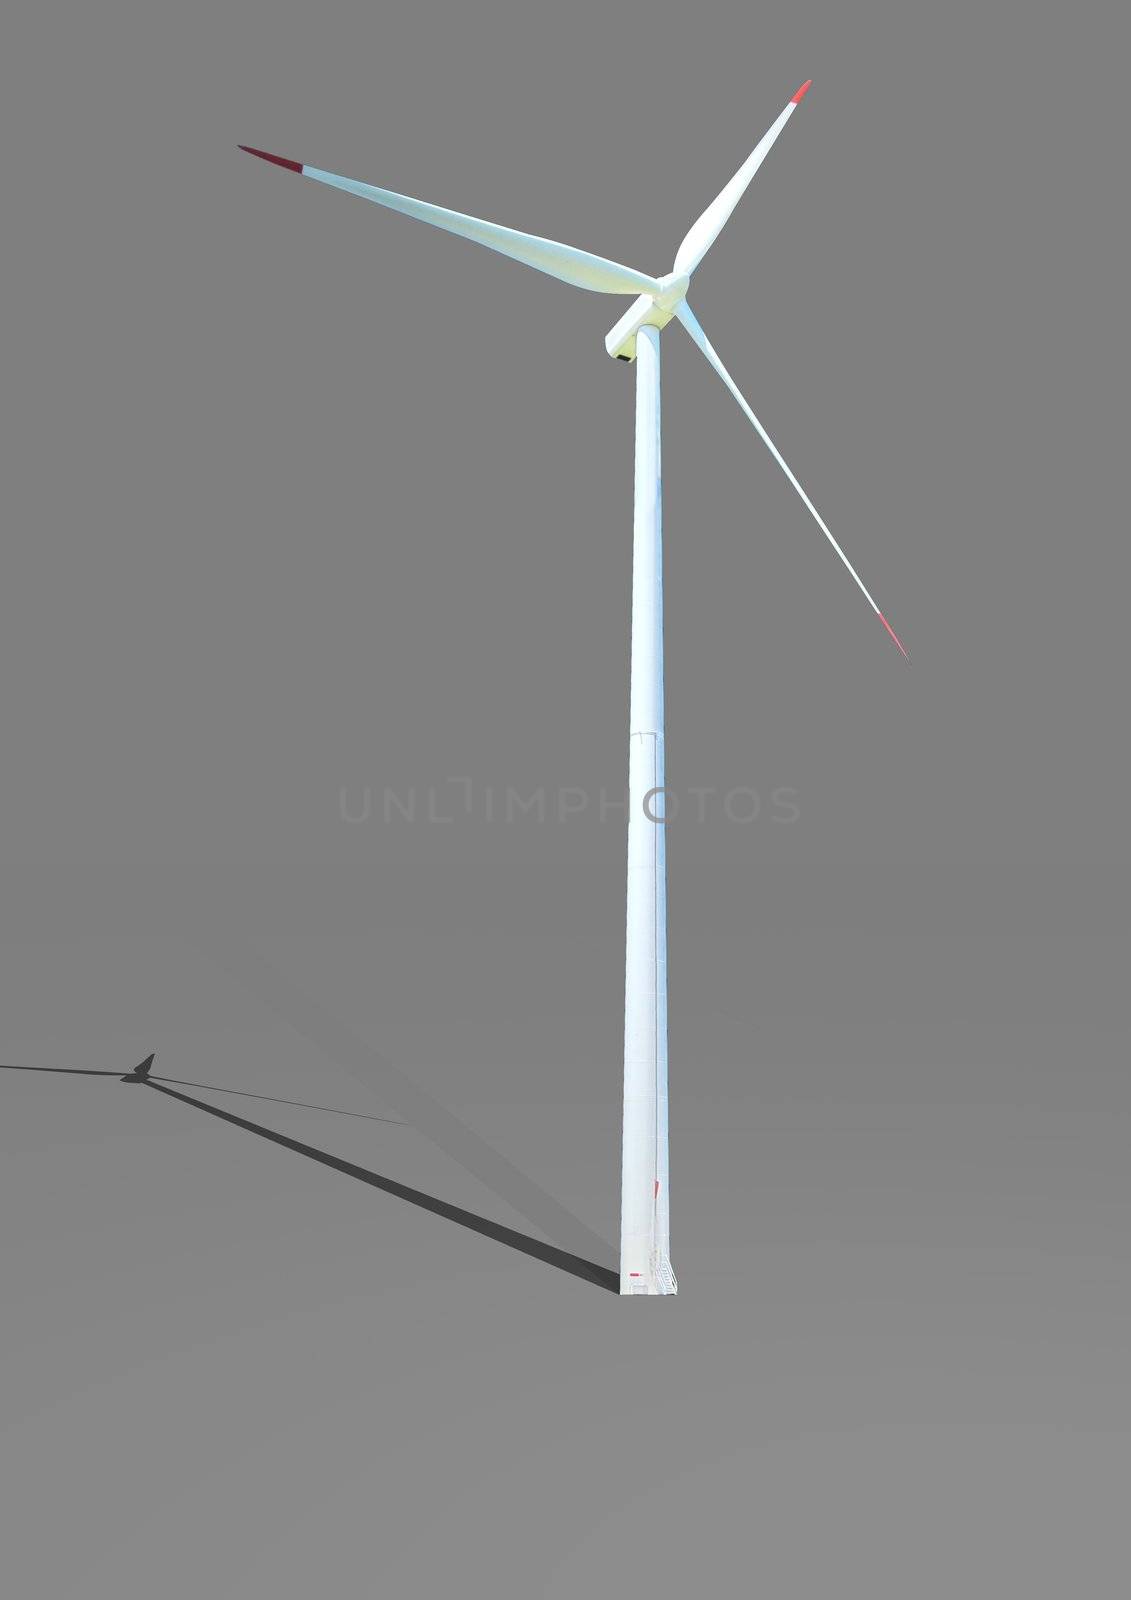 Wind turbine in grey background by Elenaphotos21